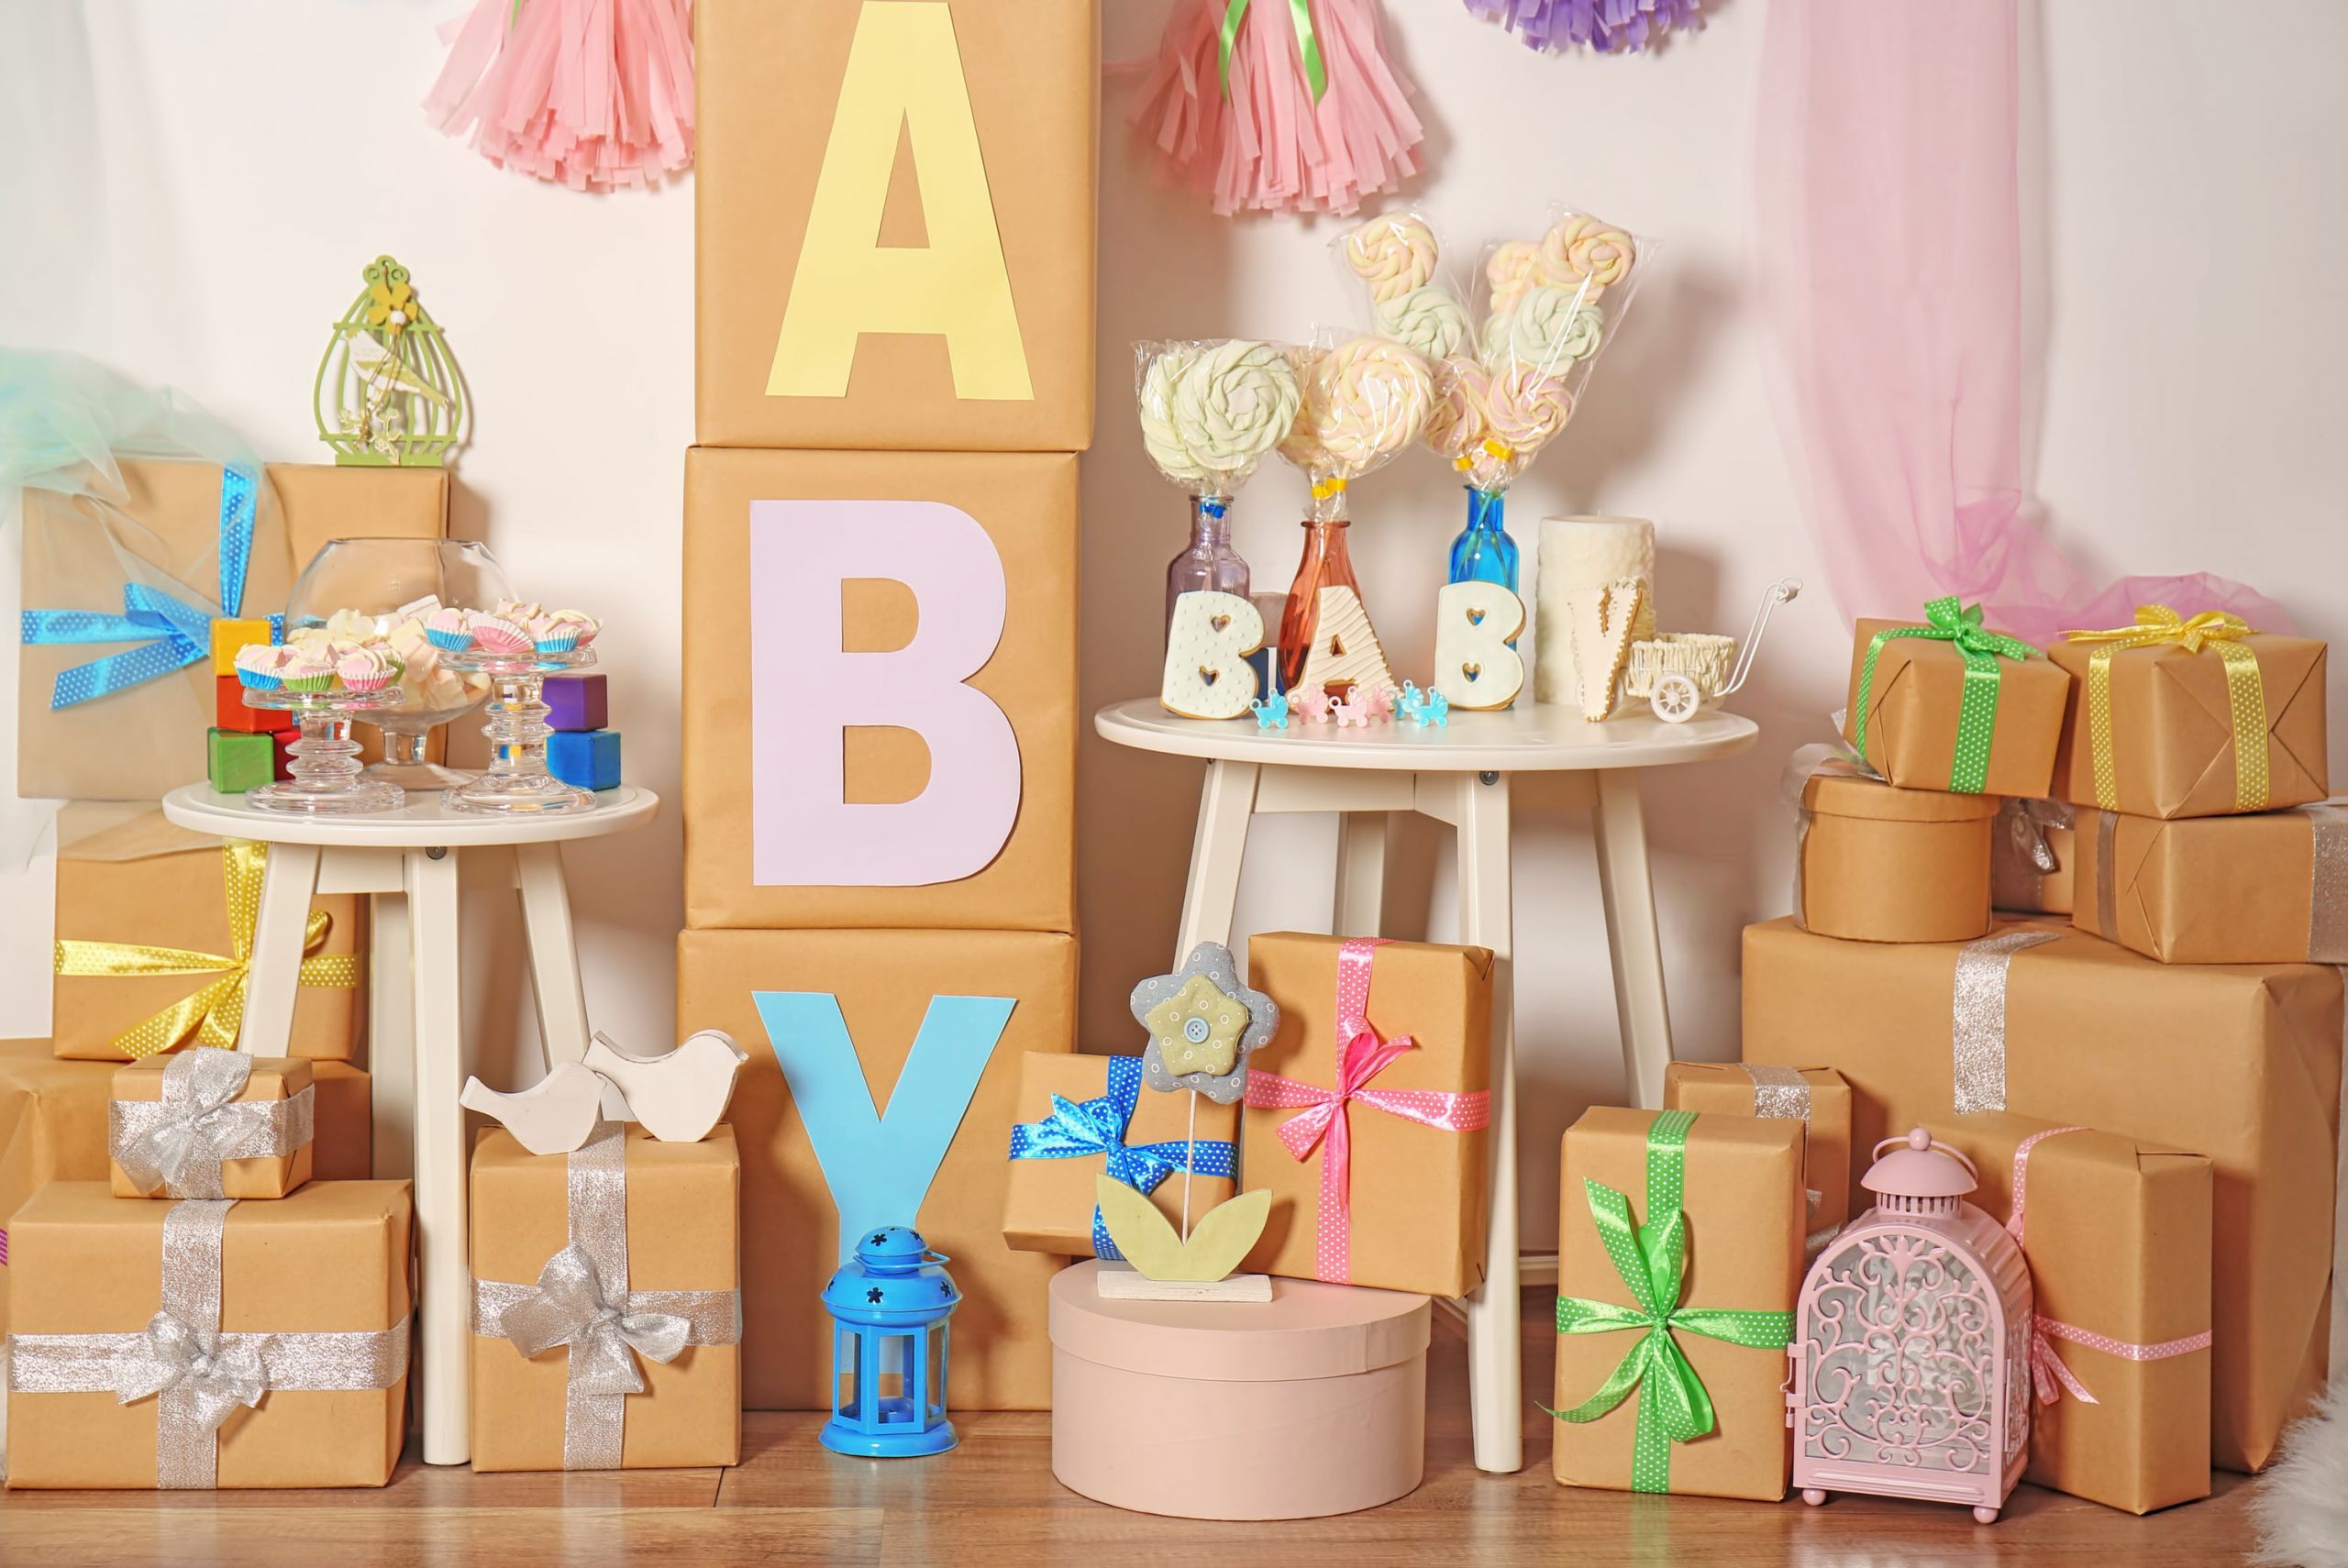 Ideas For Baby Shower Decorations
 5 Cheap & Unique Baby Shower Decoration Ideas